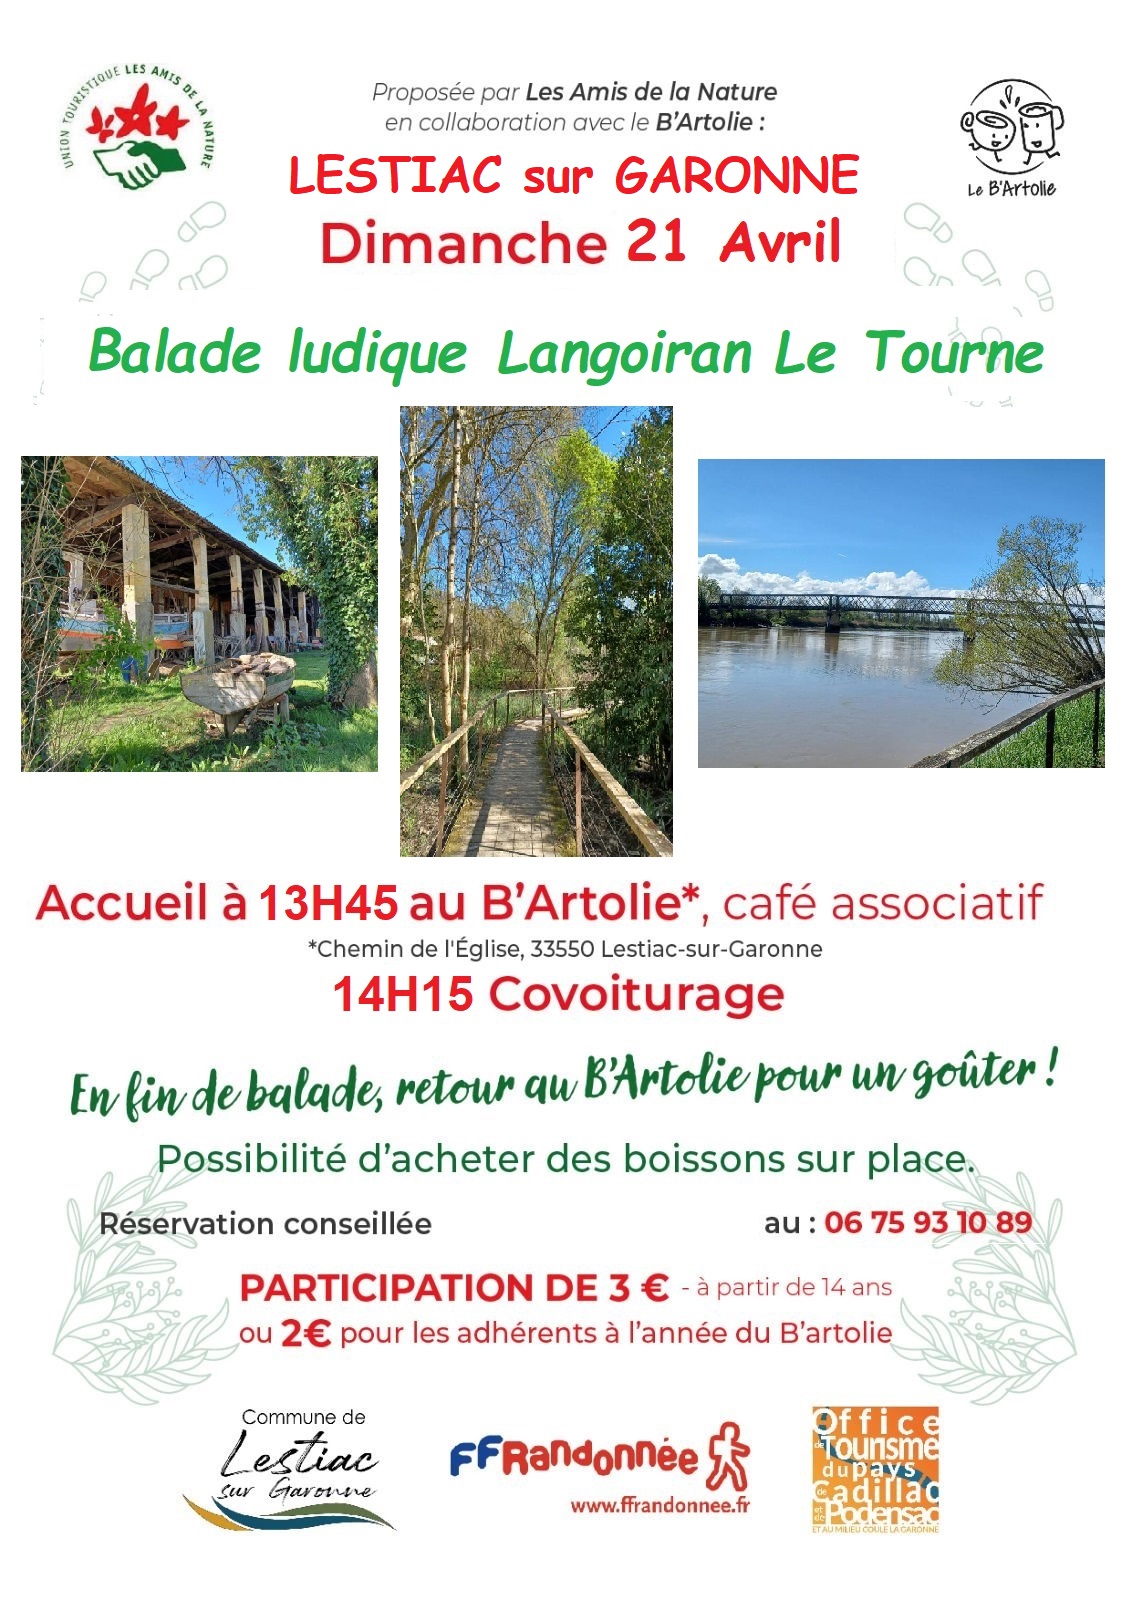 Balade découverte Le Tourne/Langoiran